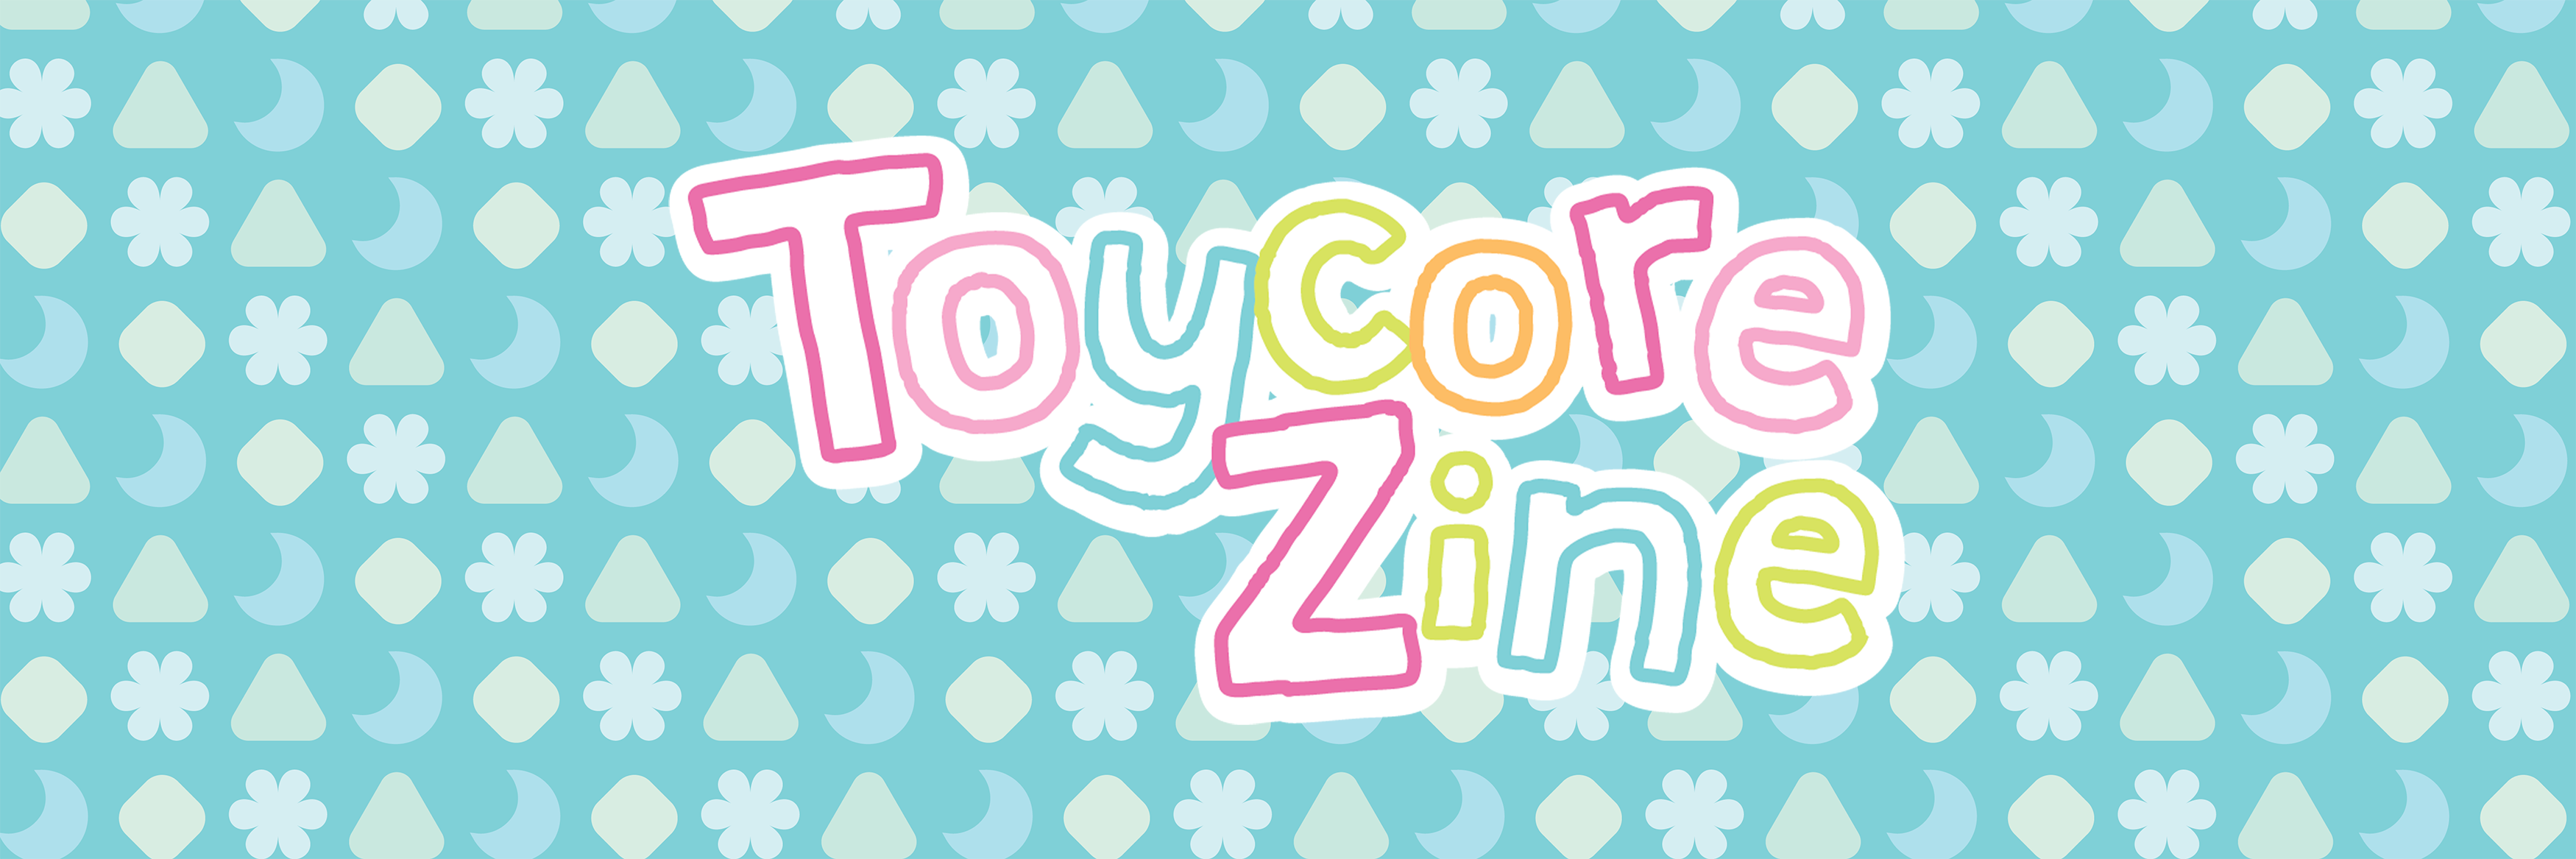 Toycore Zine - Sales Closed!